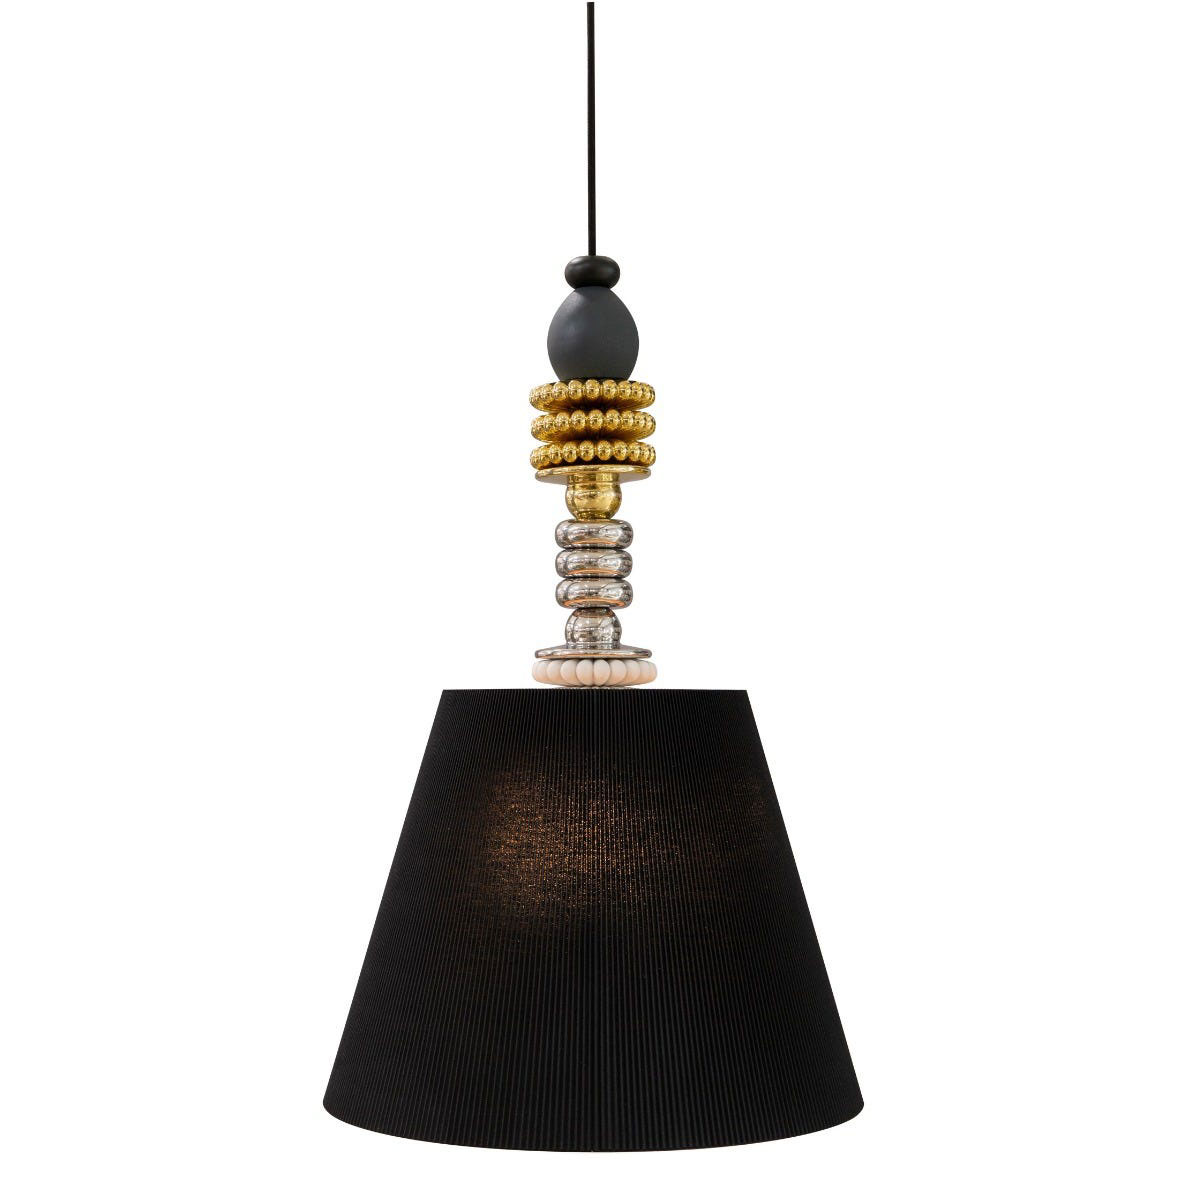 Lladro Modern Lighting, Firefly Hanging Lamp By Olga Hanono